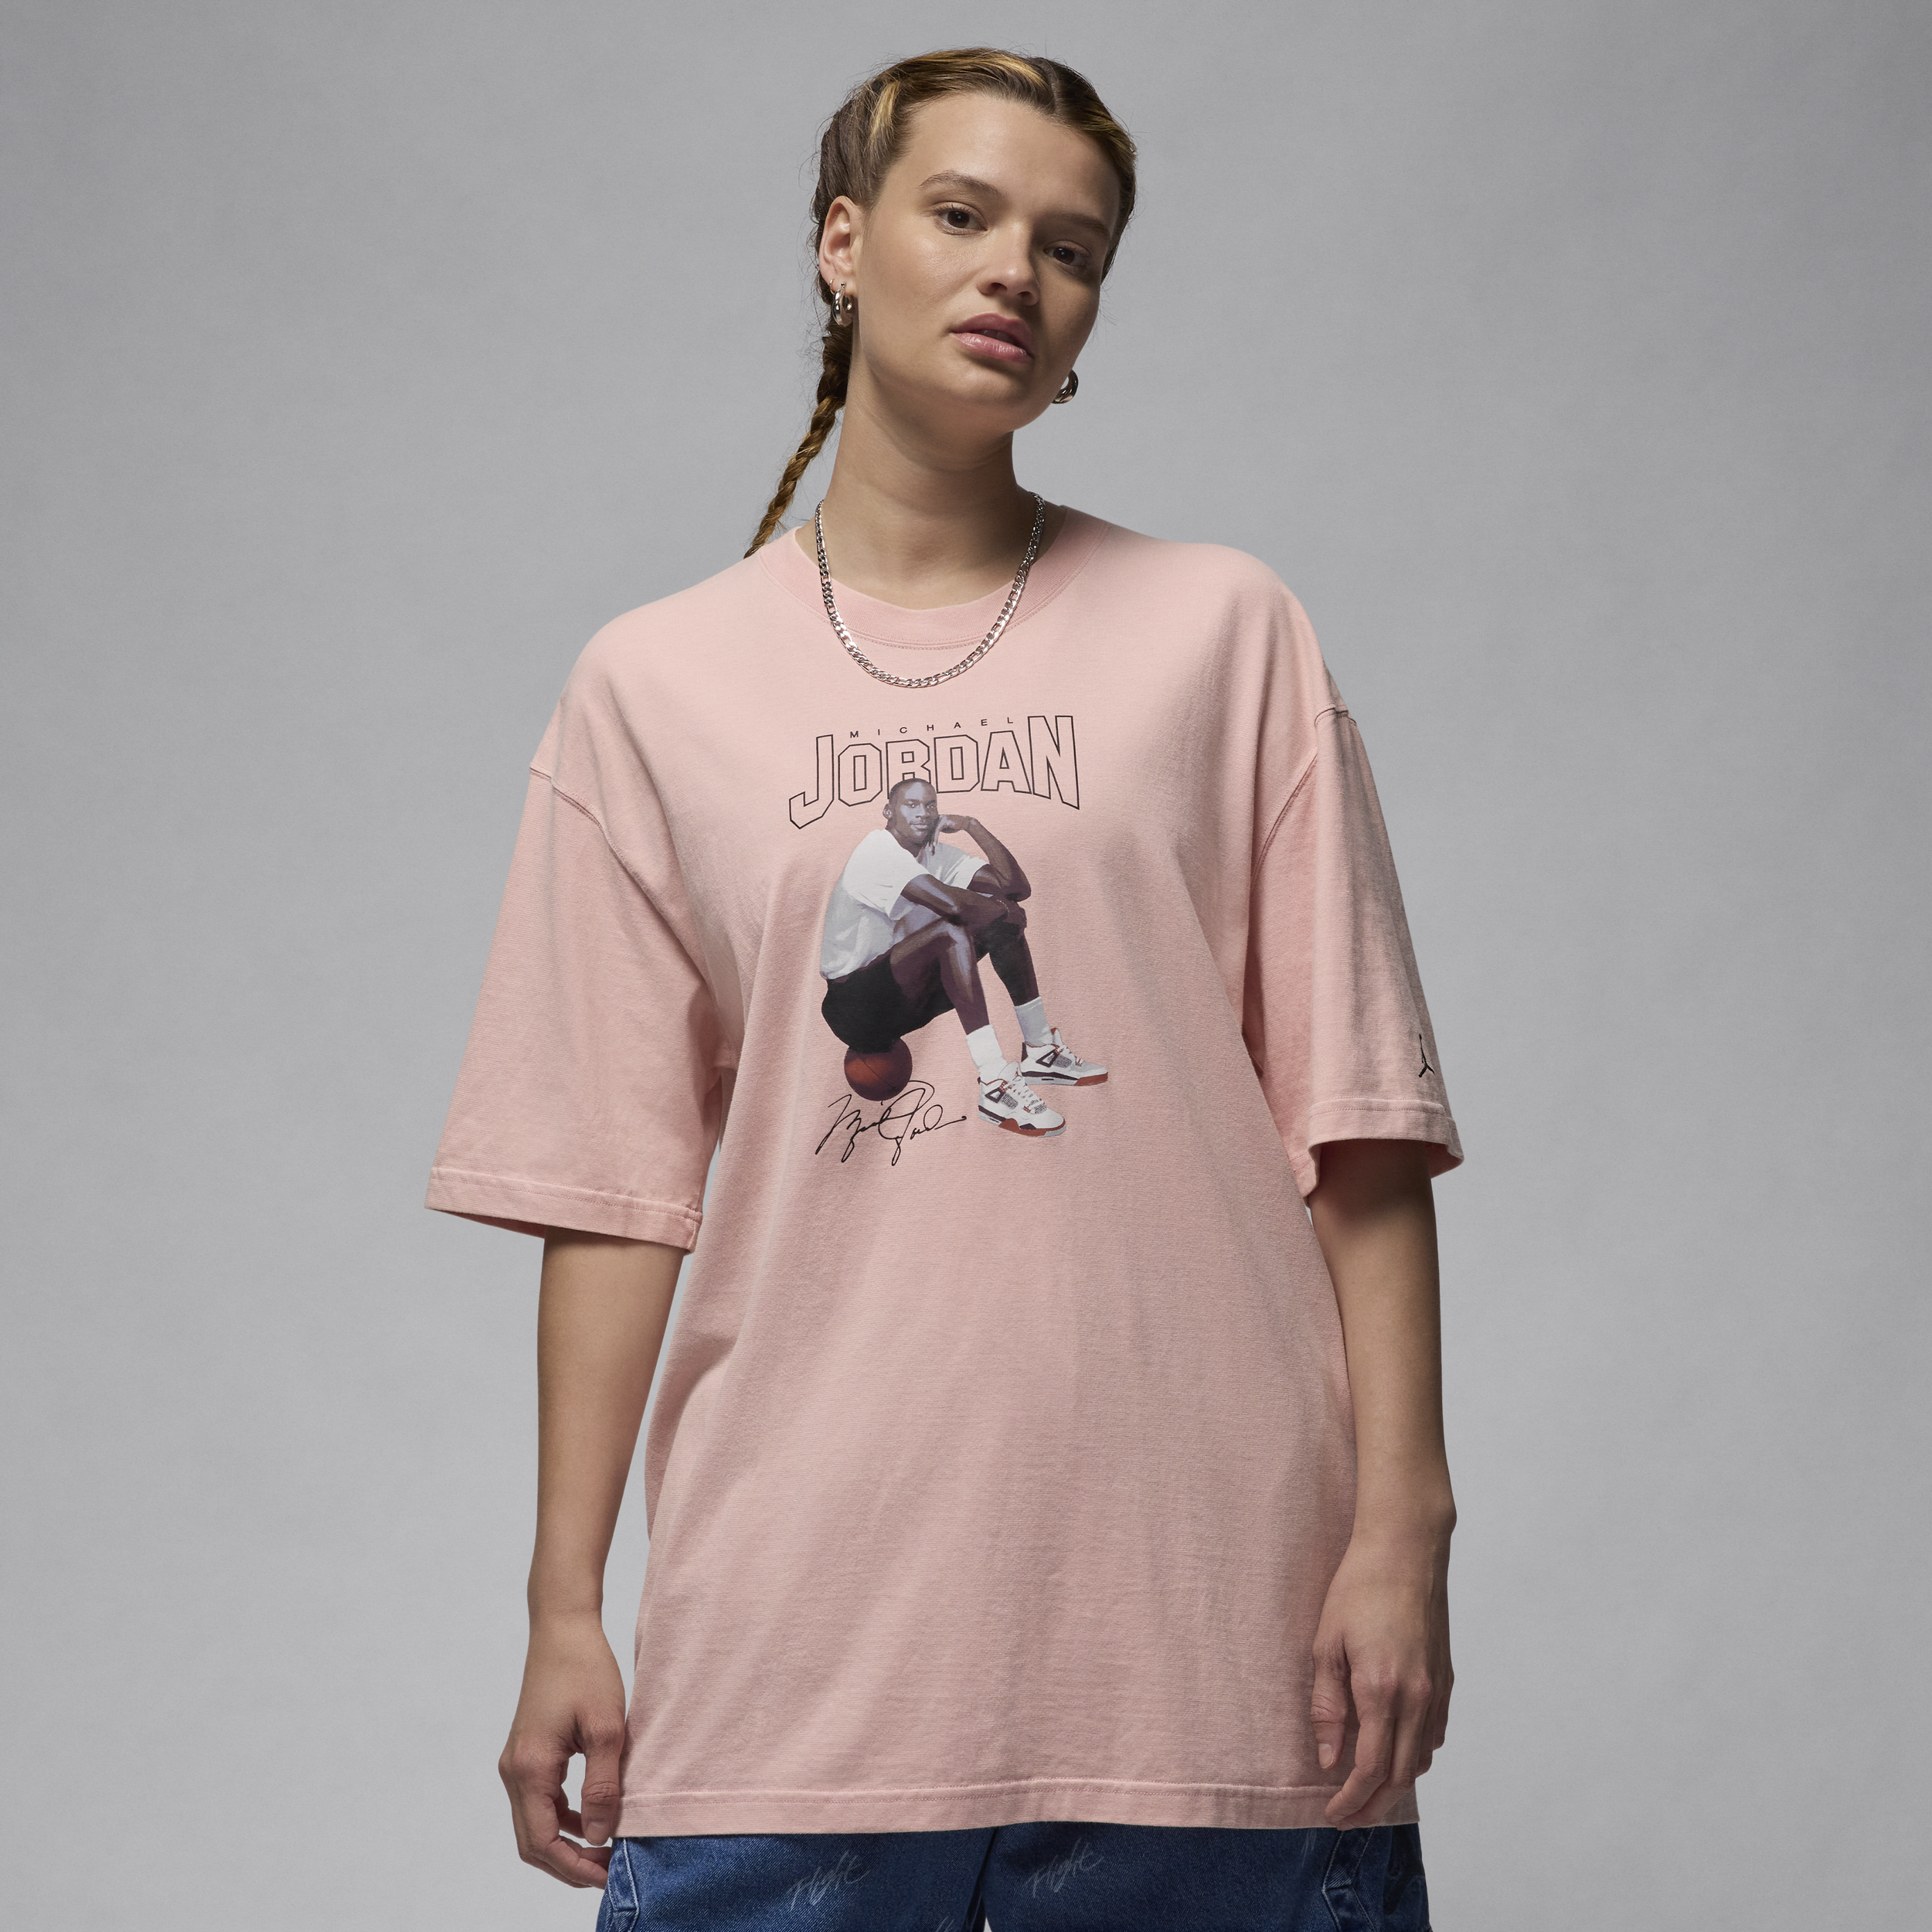 Nike T-shirt oversize con grafica Jordan – Donna - Rosa